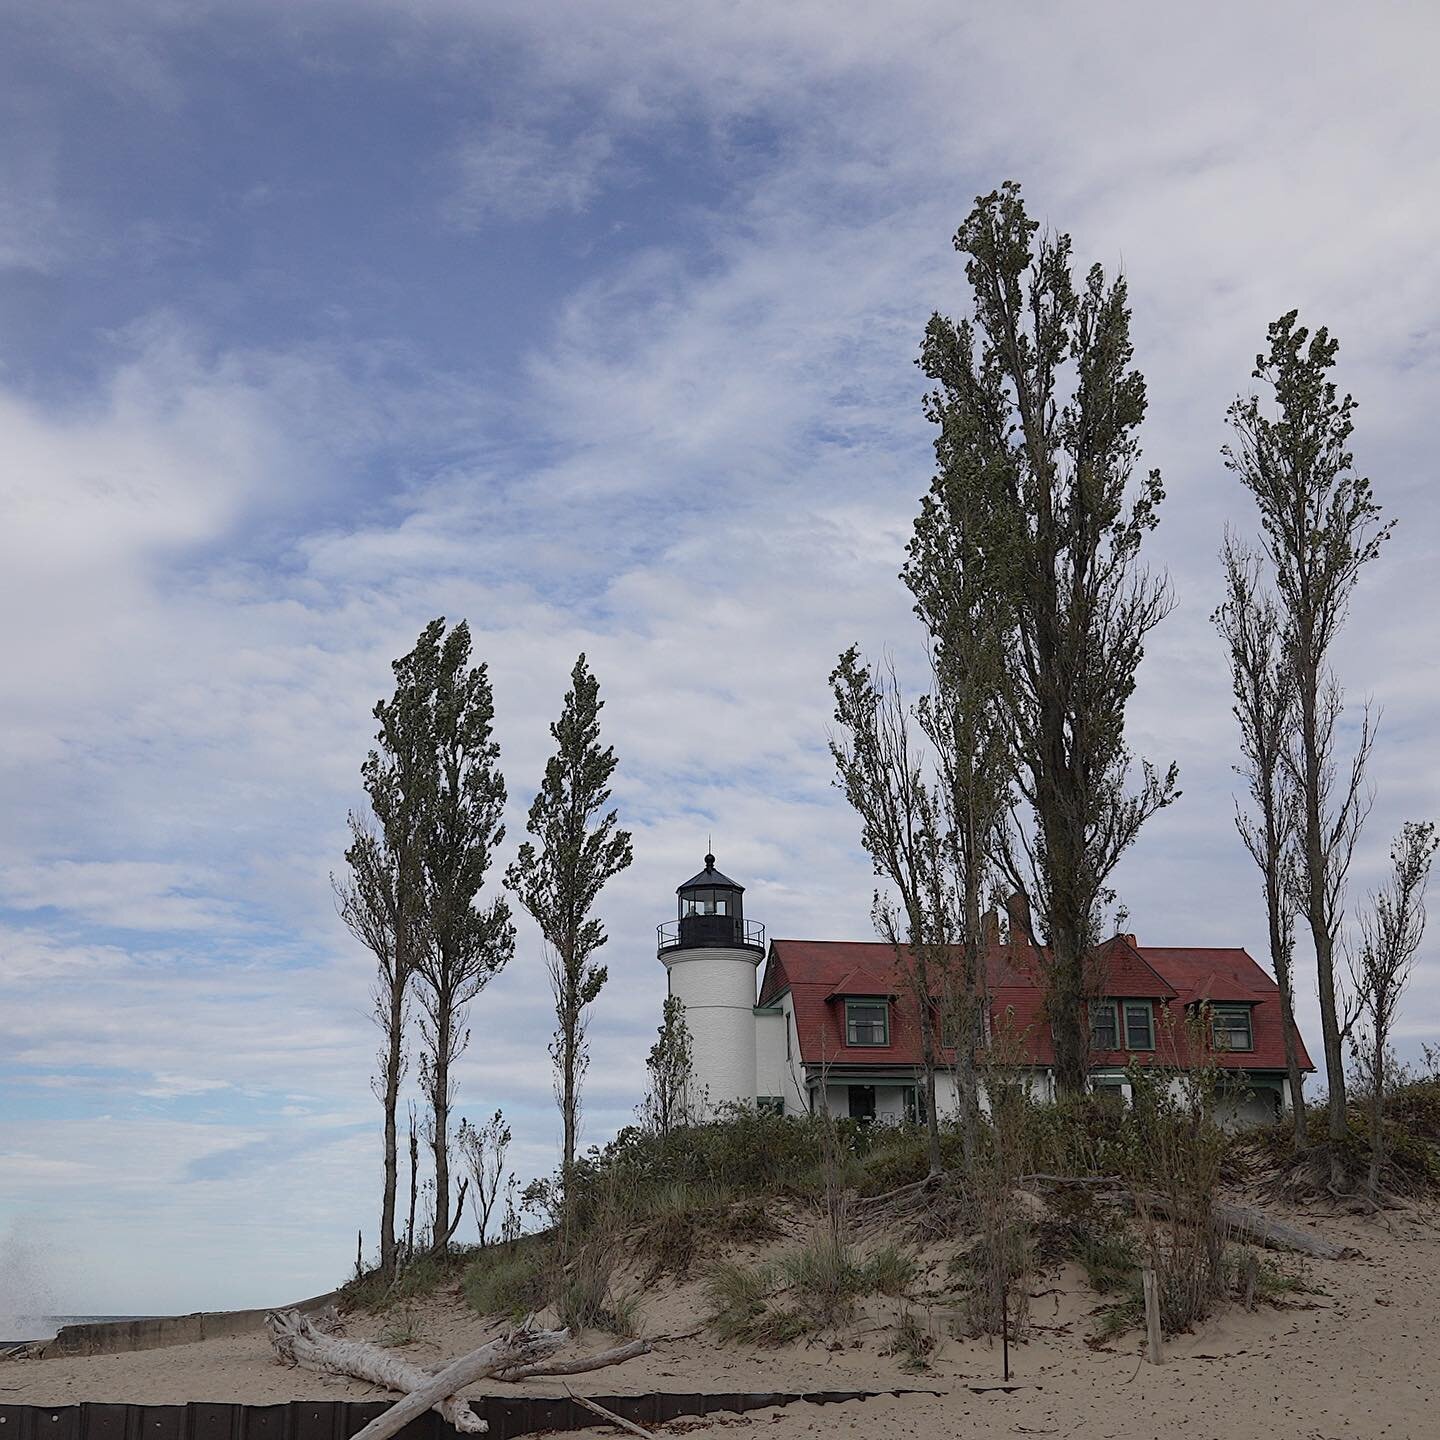 Point Betsie Lighthouse on the coast of Lake Michigan.
#pointbetsielighthouse